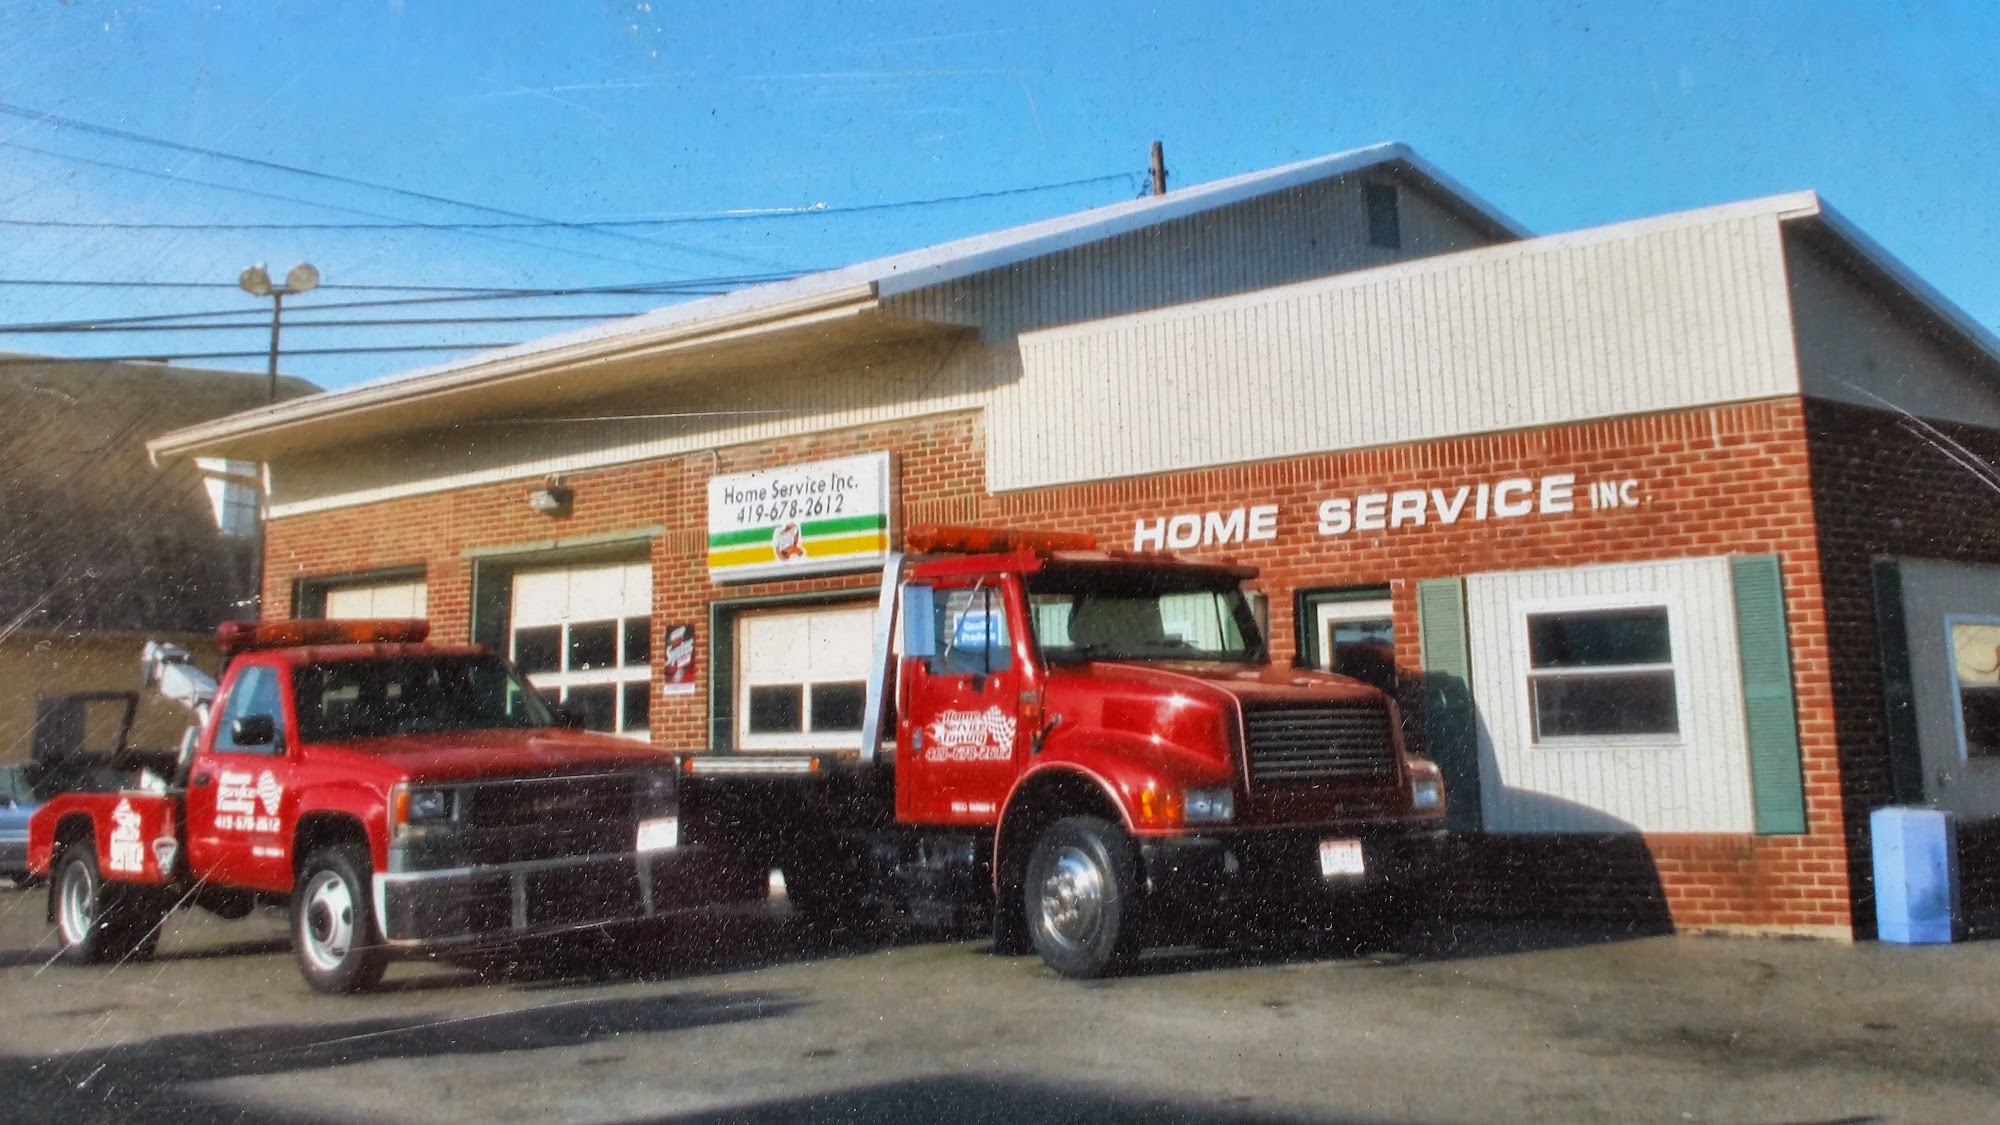 Home Service Station, Inc